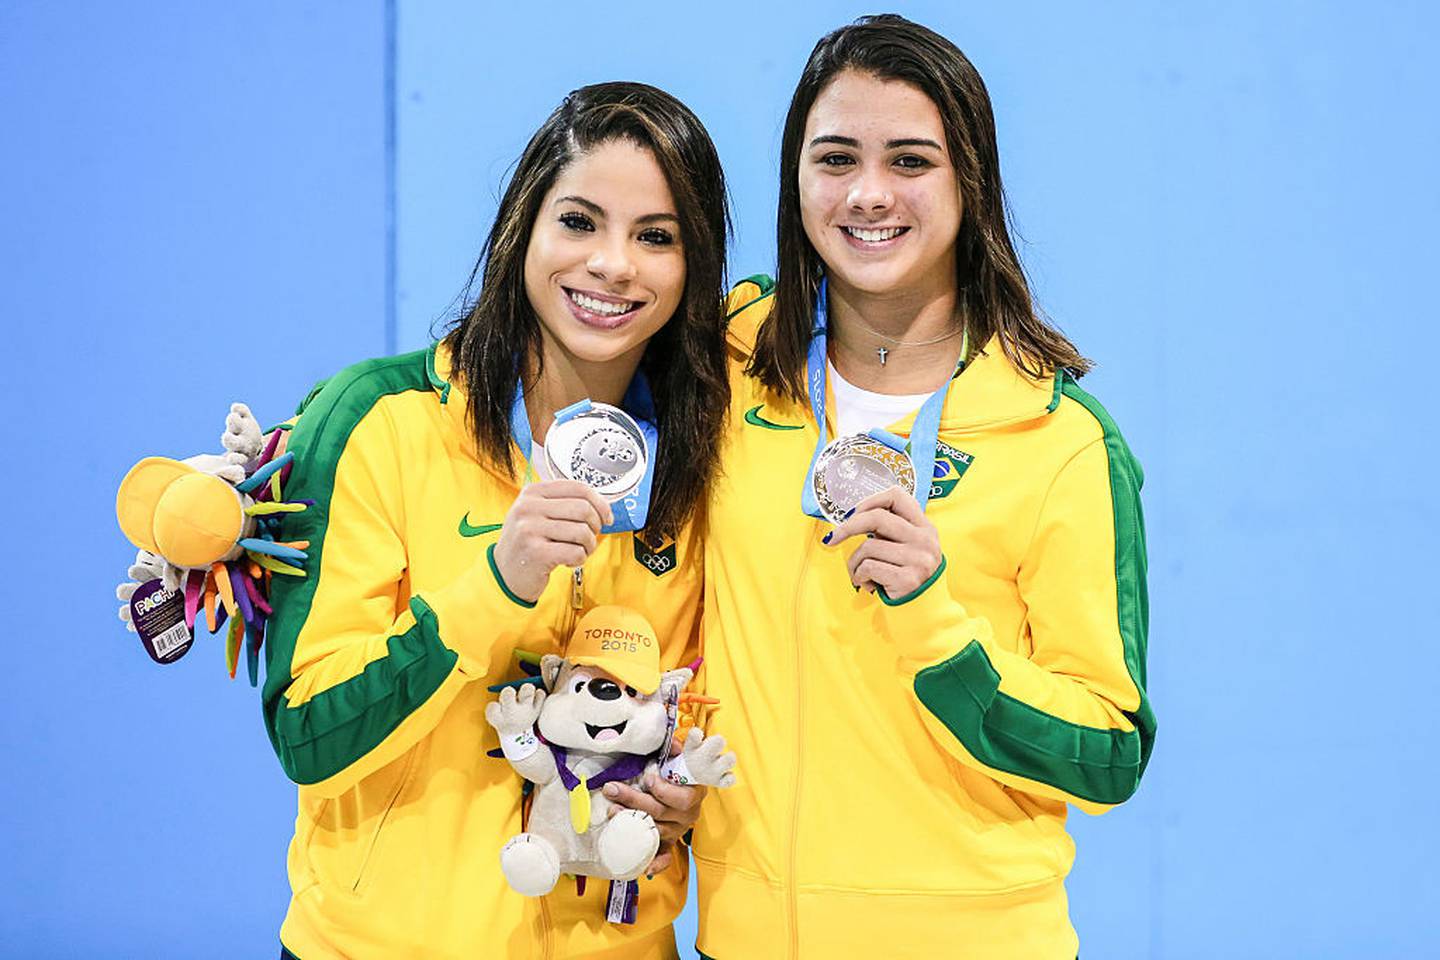 Brazilian Diver Ingrid Oliveira Breaks Silence On Rio Olympics Sex Scandal